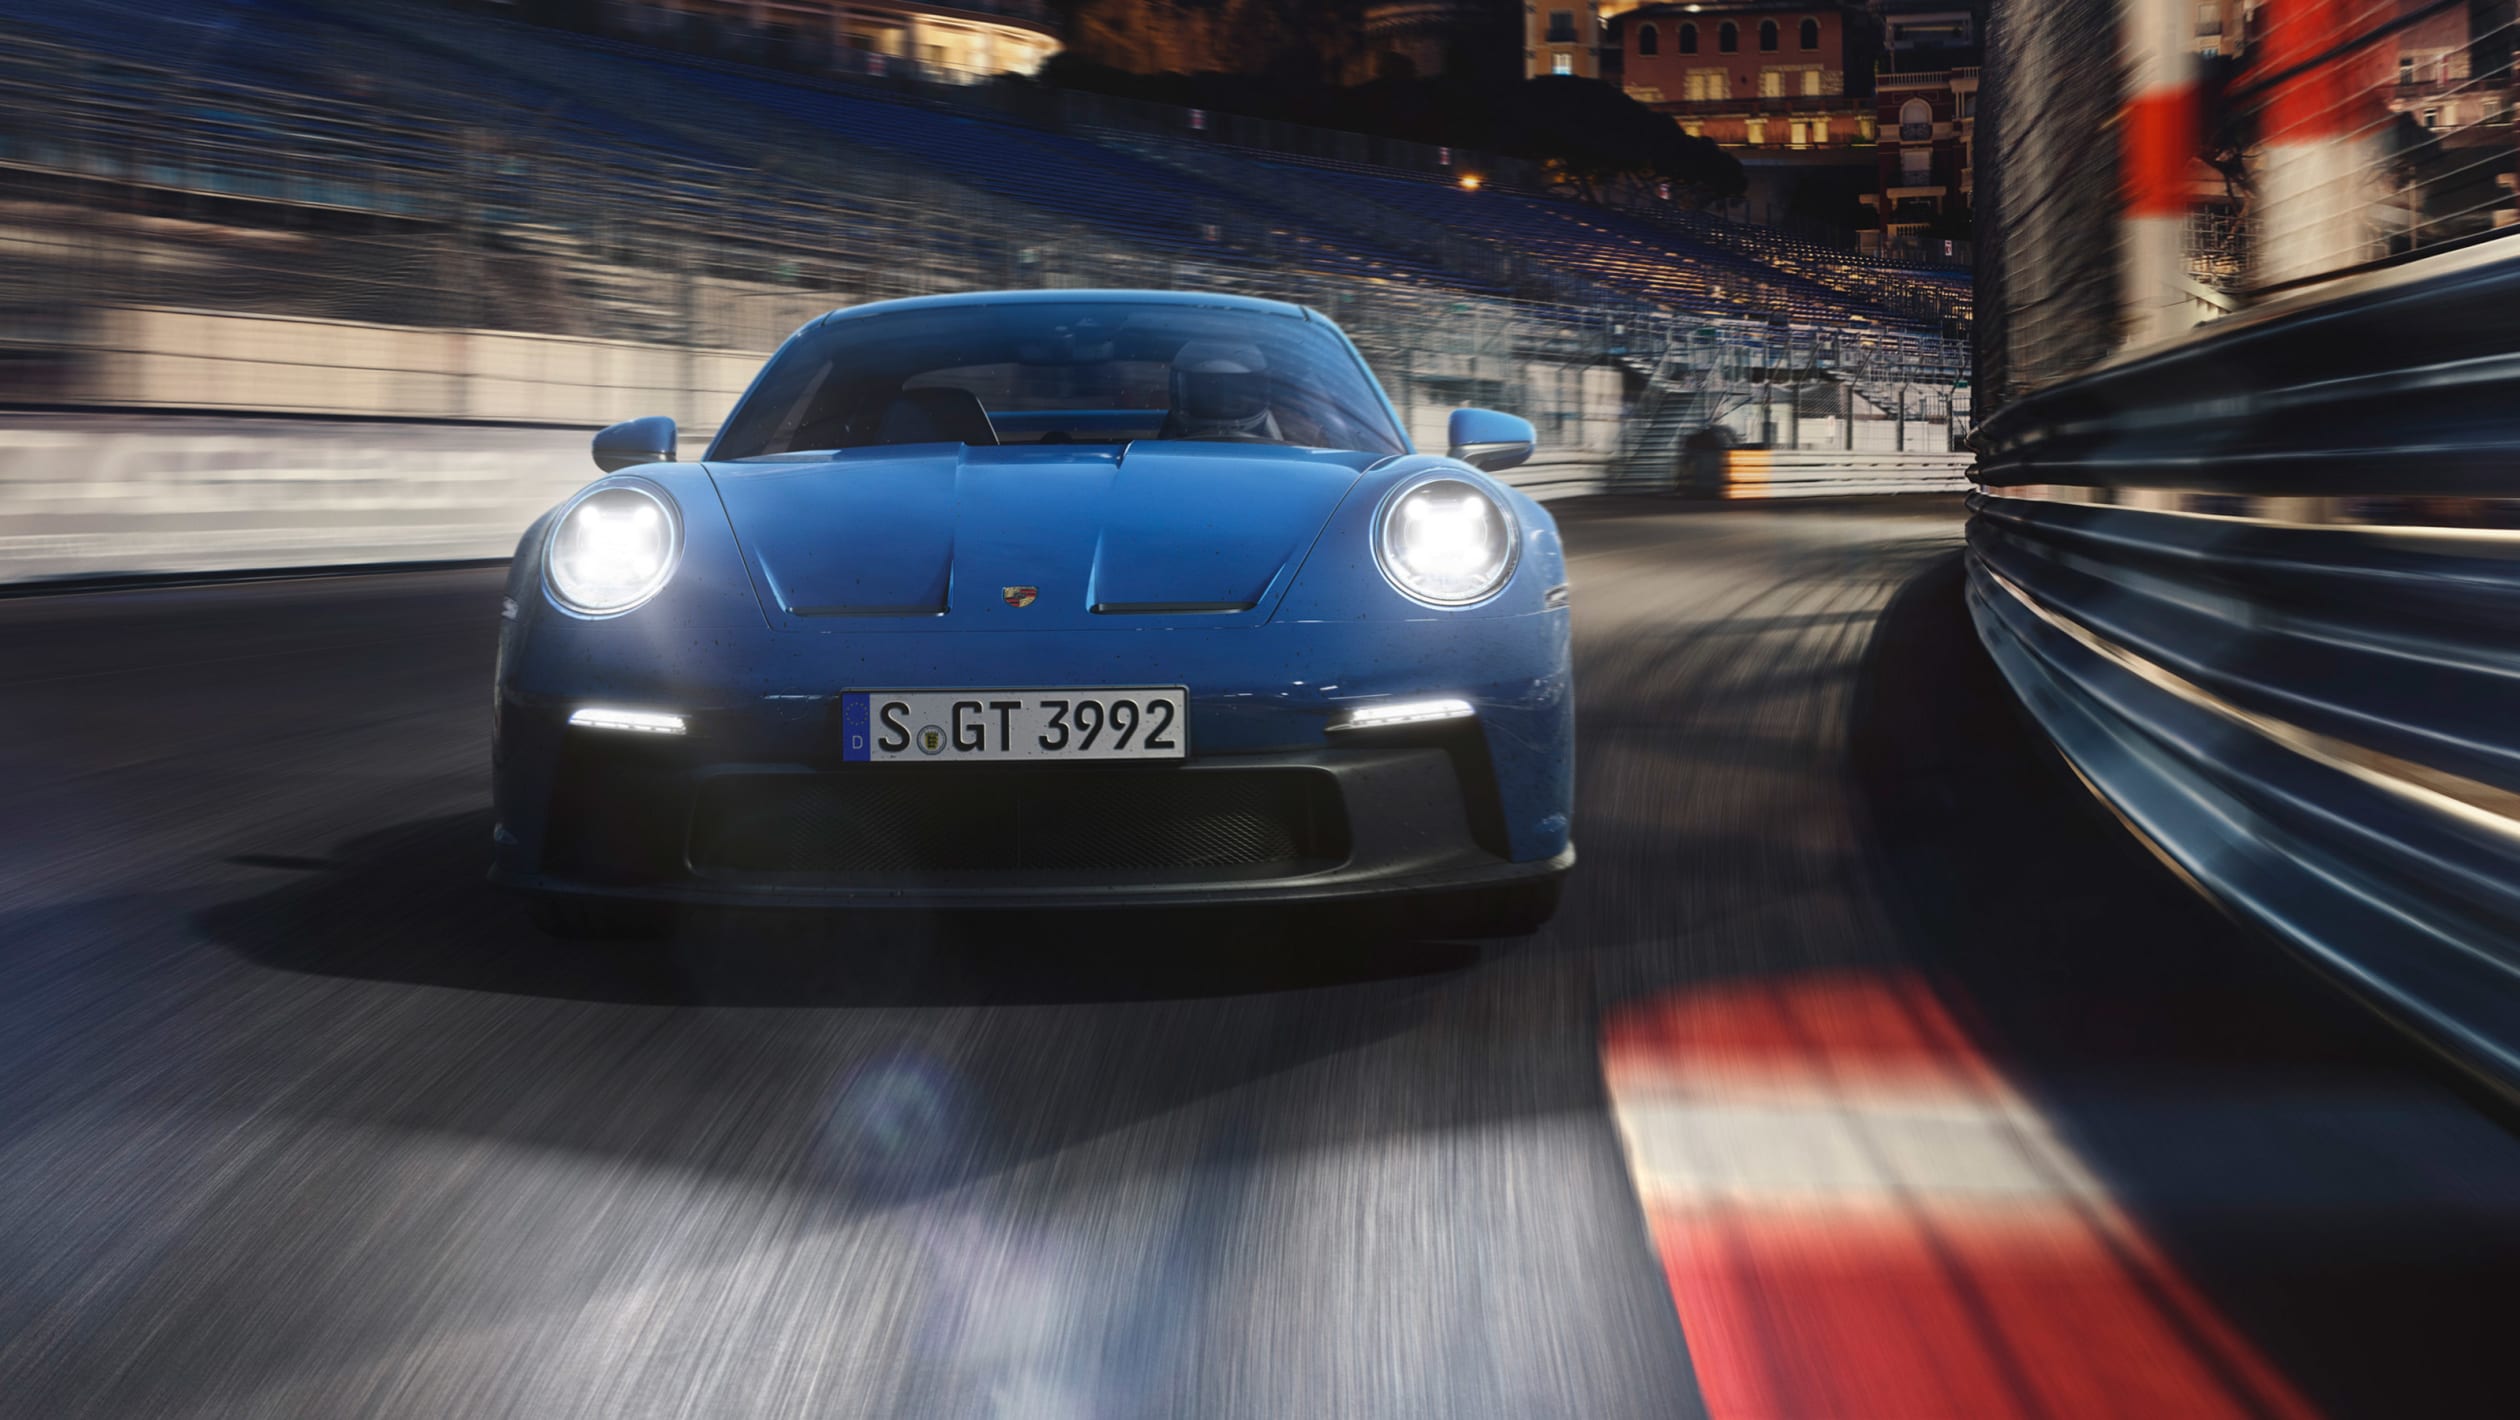 aria-label="Porsche 911 GT3 992 reveal 5"